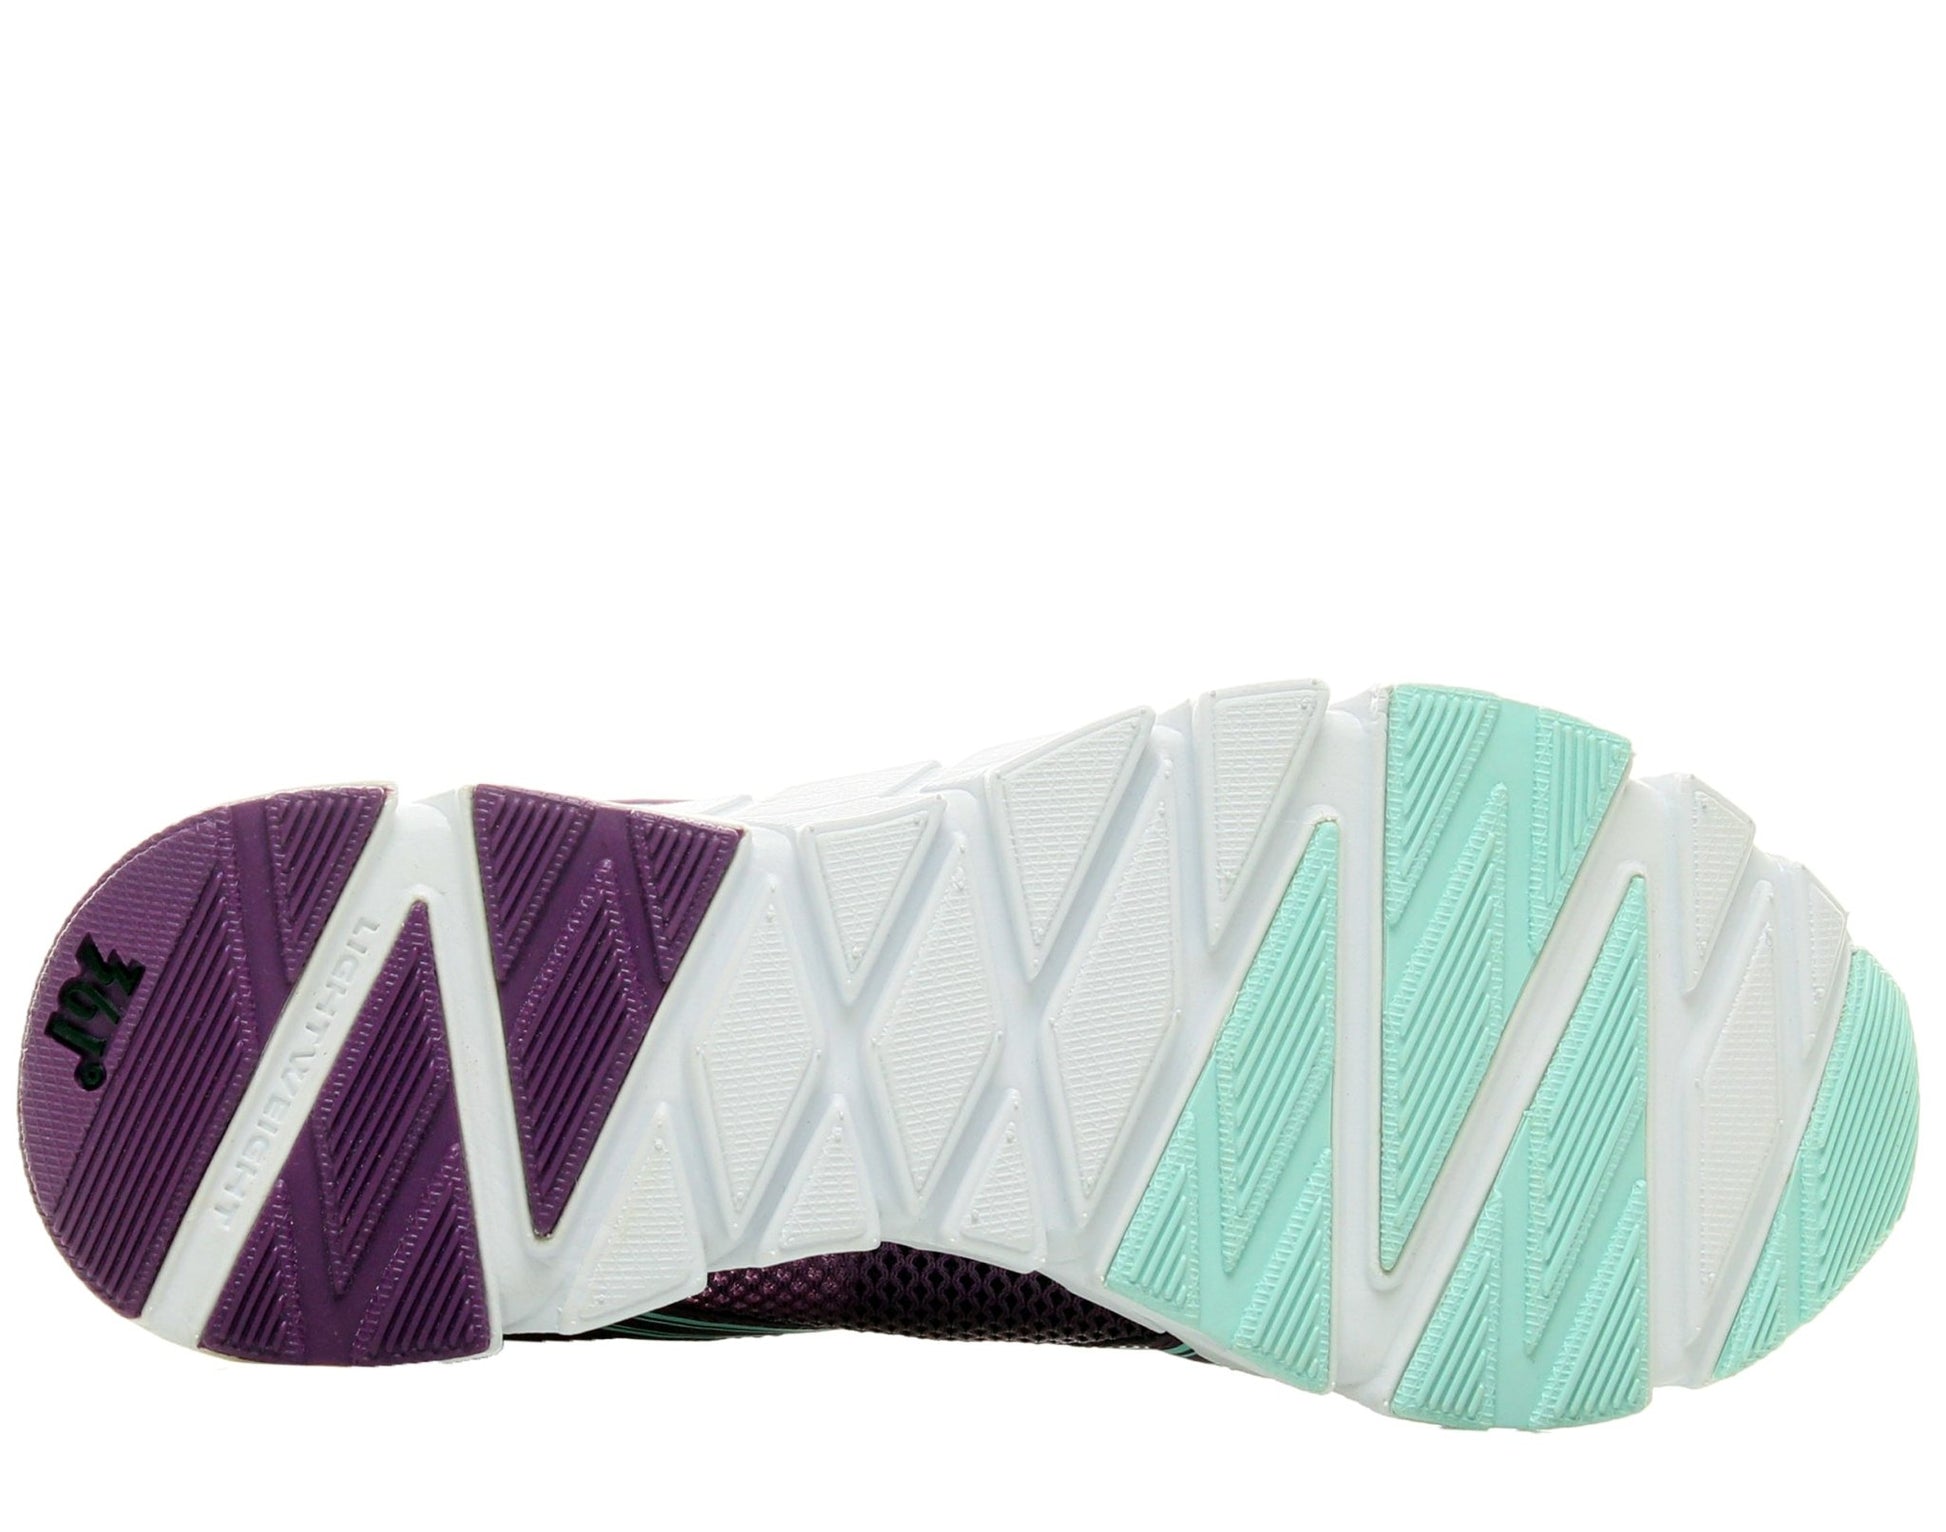 361 Feather Light Blue/Sunset Purple Women's Running Shoes 201420105-6005 - Becauze